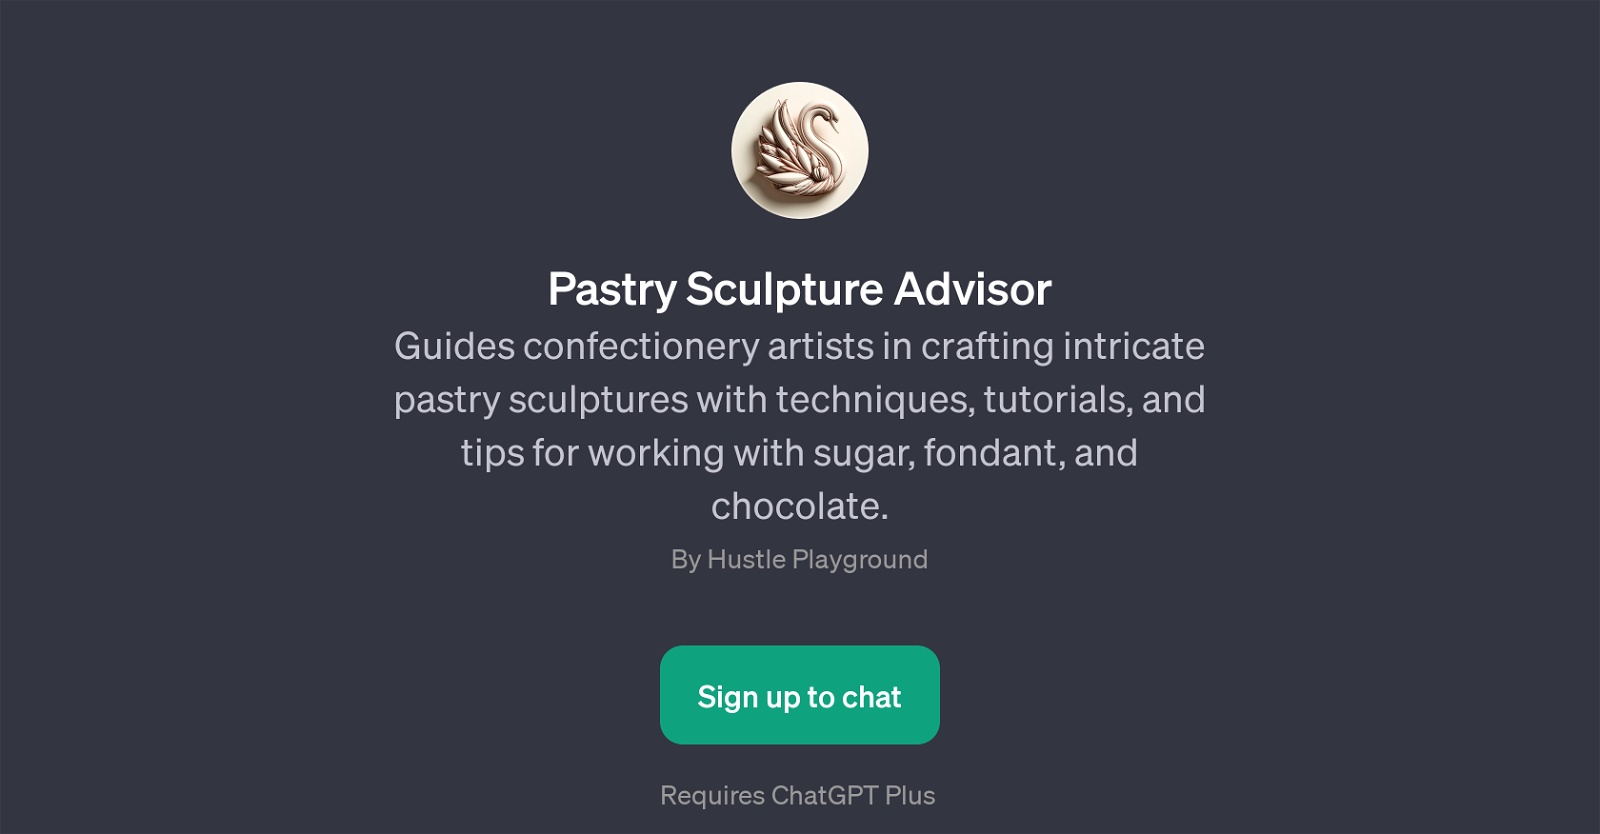 Pastry Sculpture Advisor website